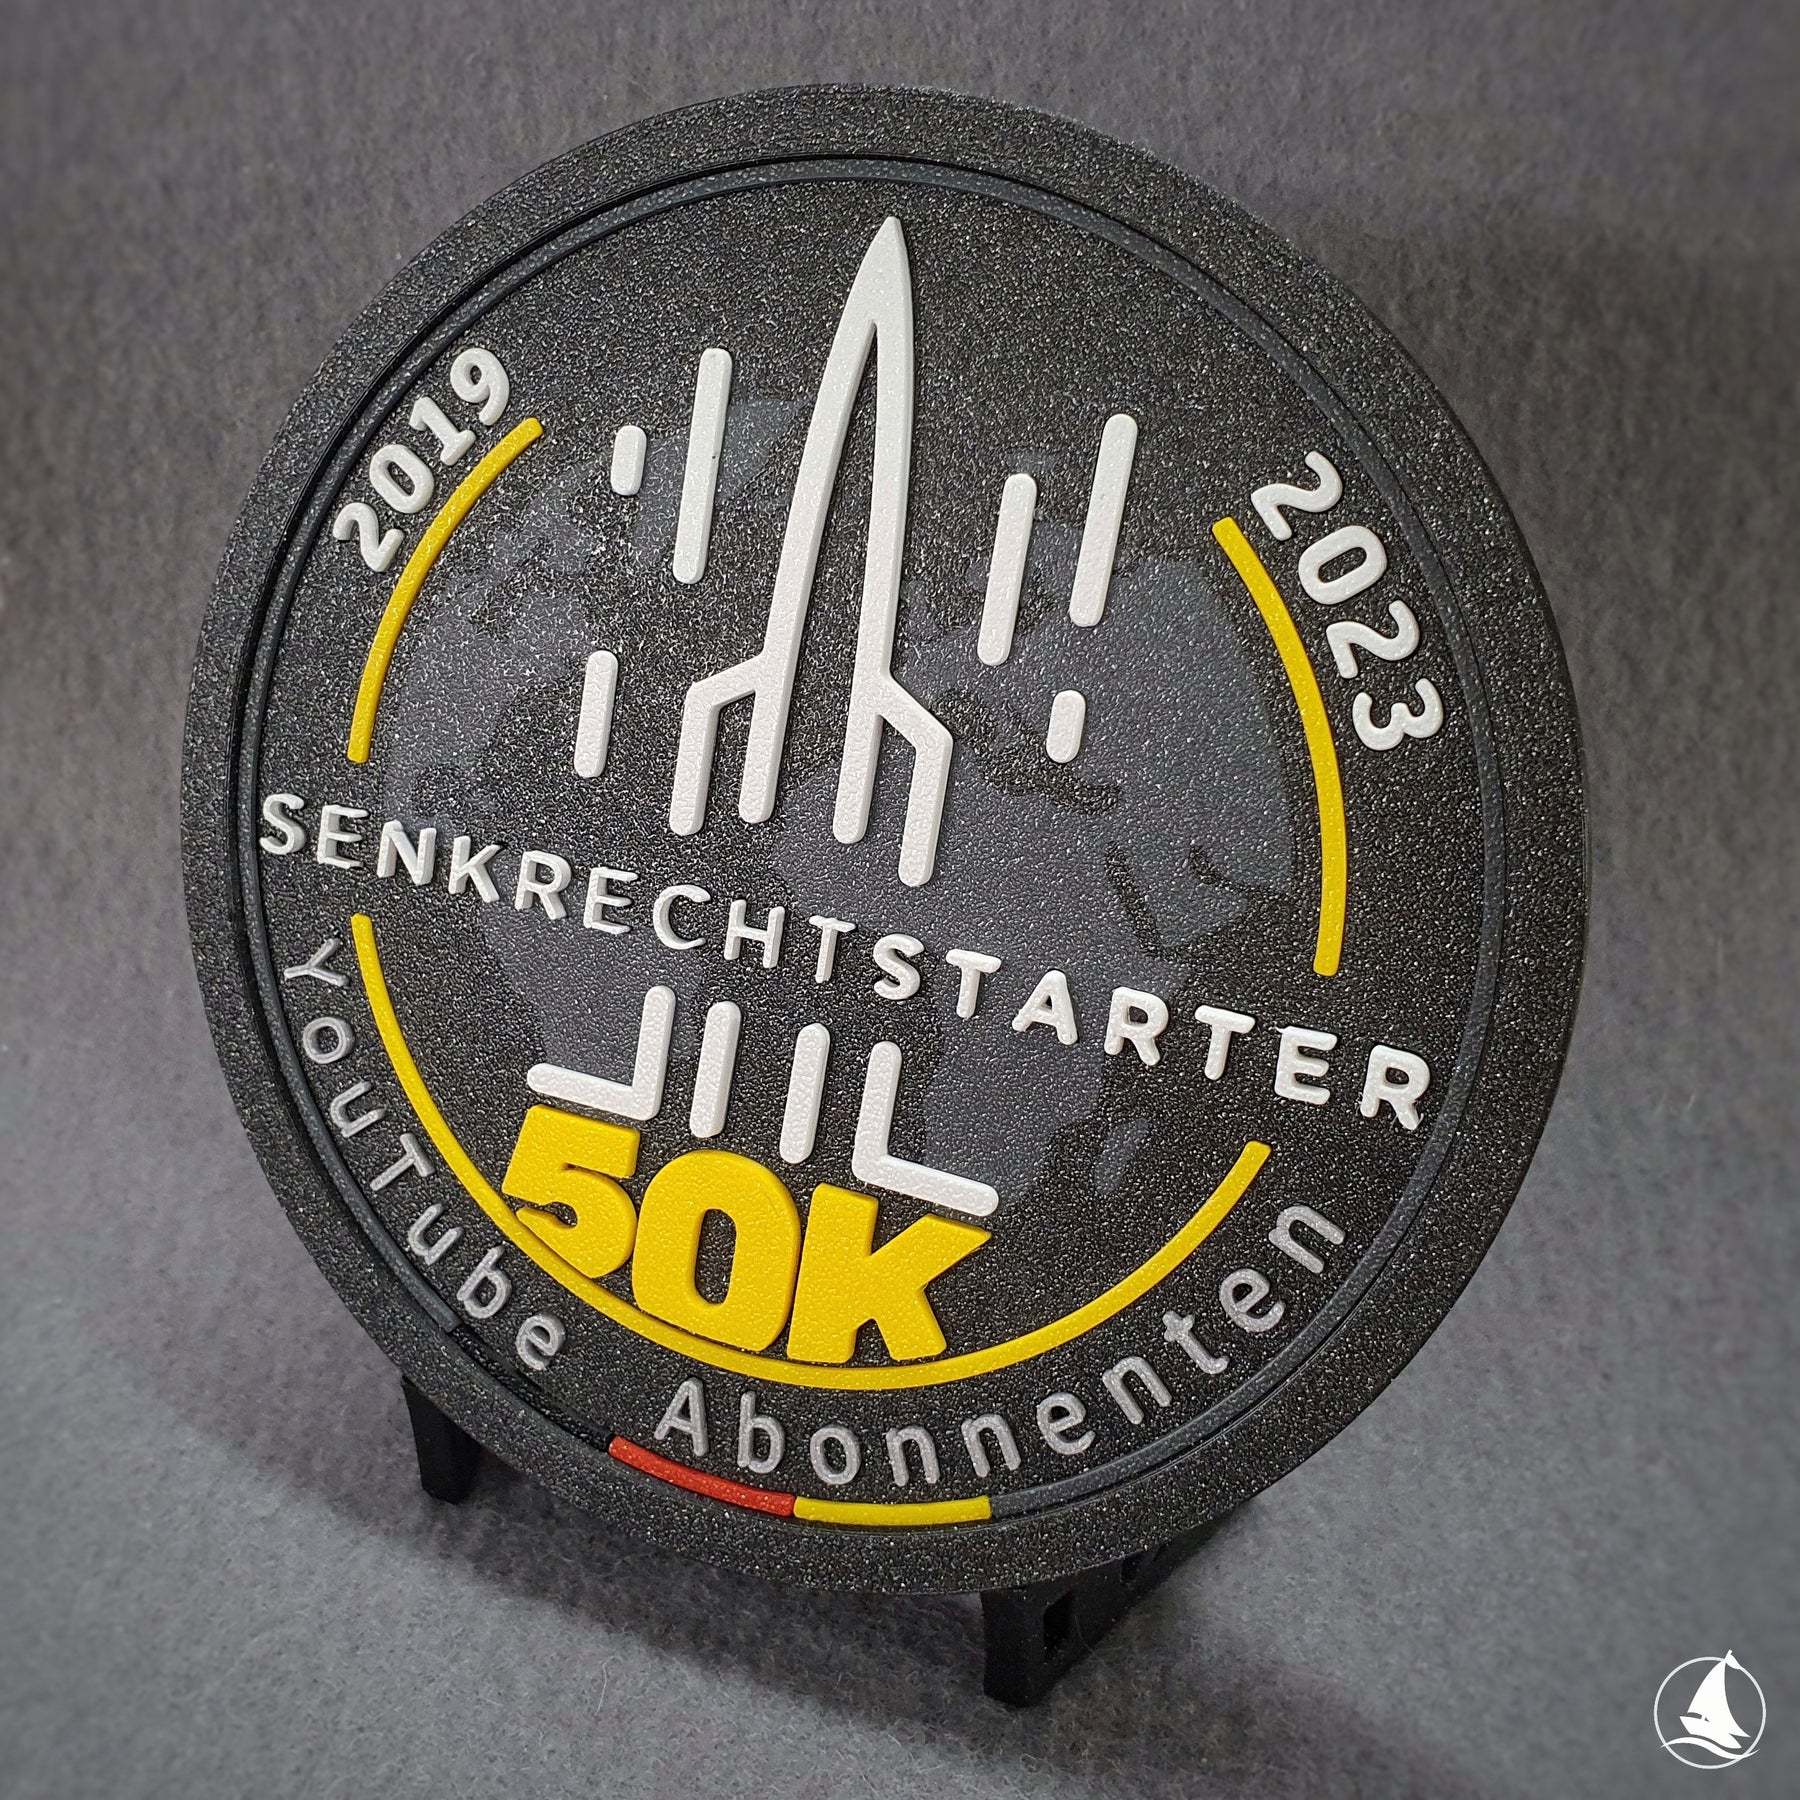 Senkrechtstarter - 50k Subscribers 3D printed Patch